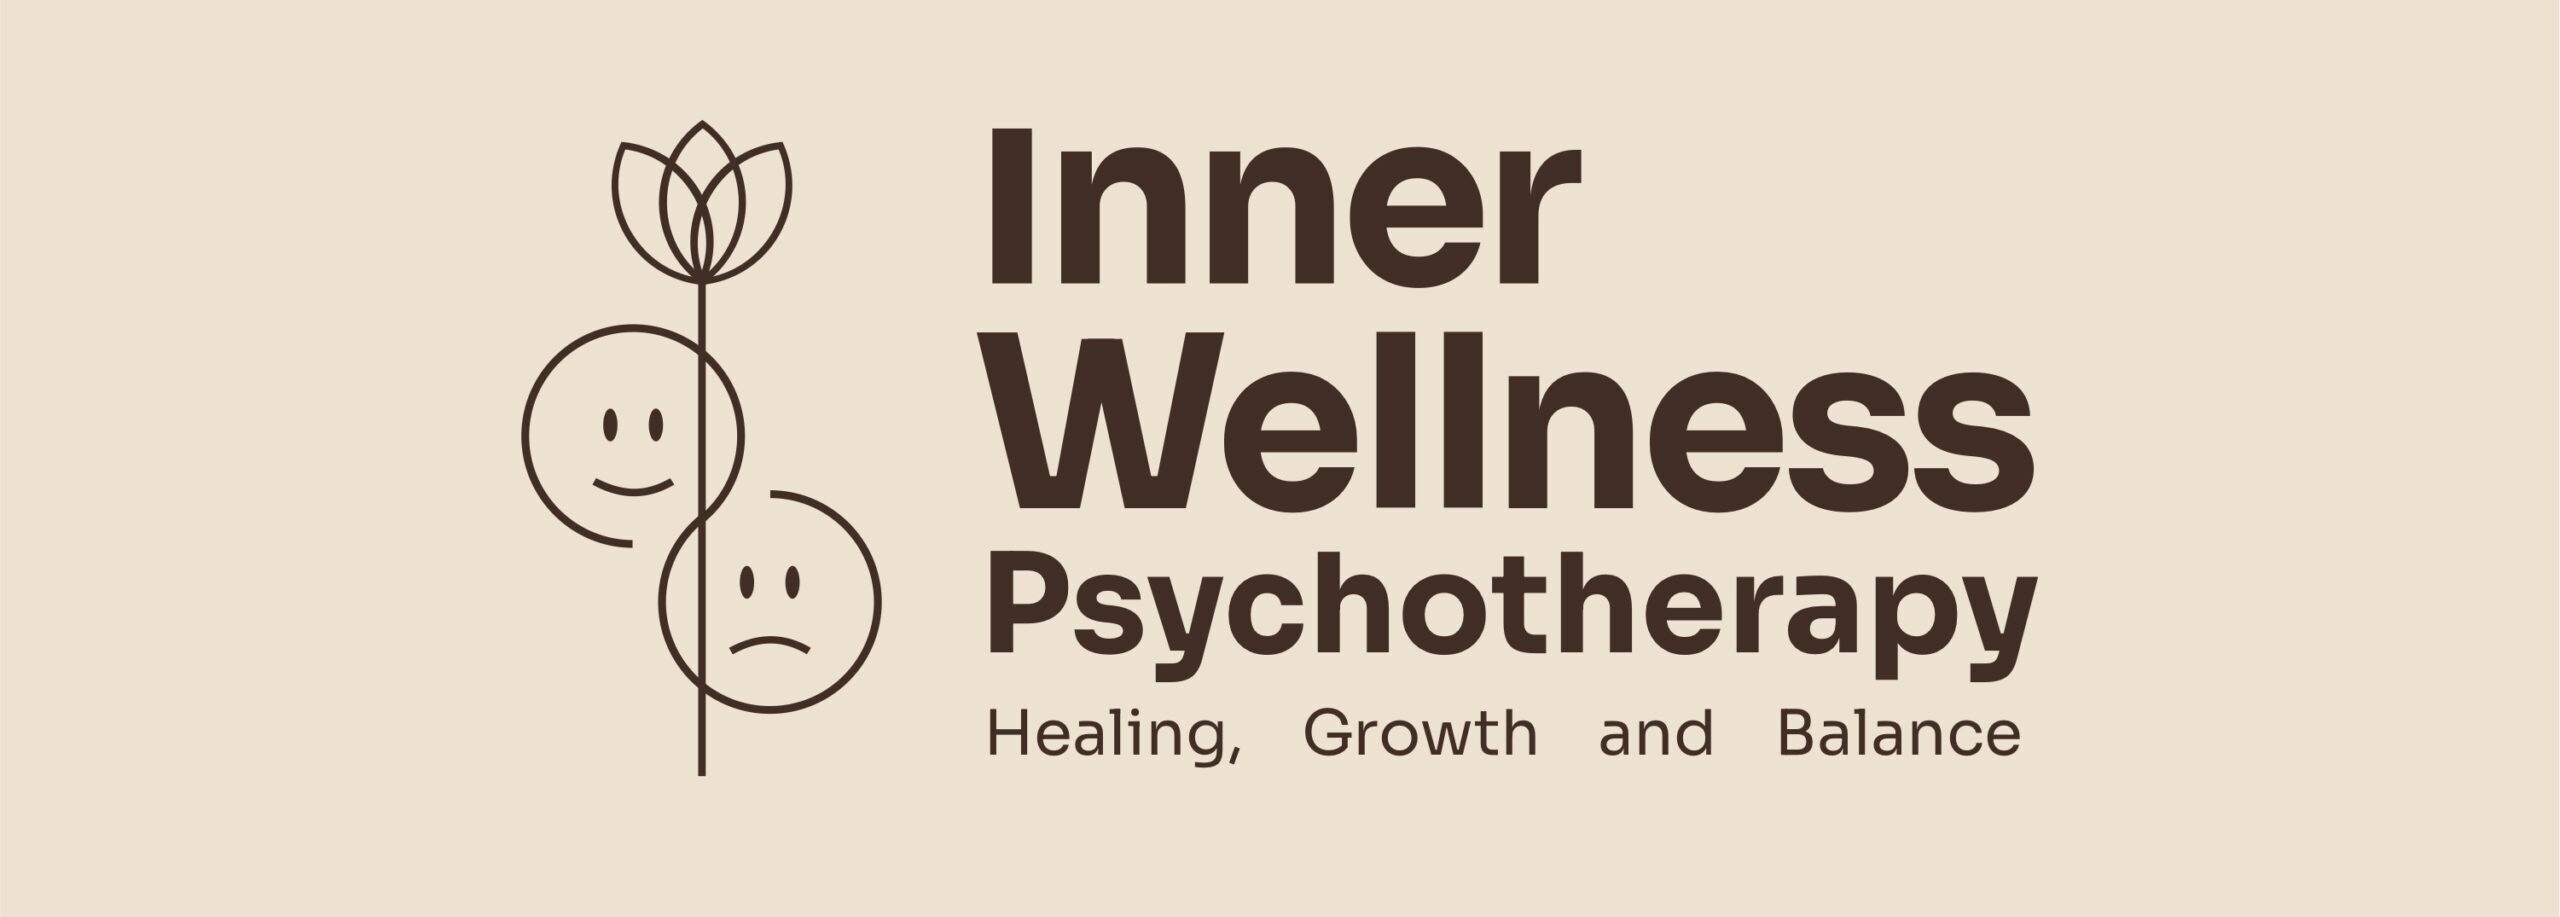 Inner Wellness Psychotherapy